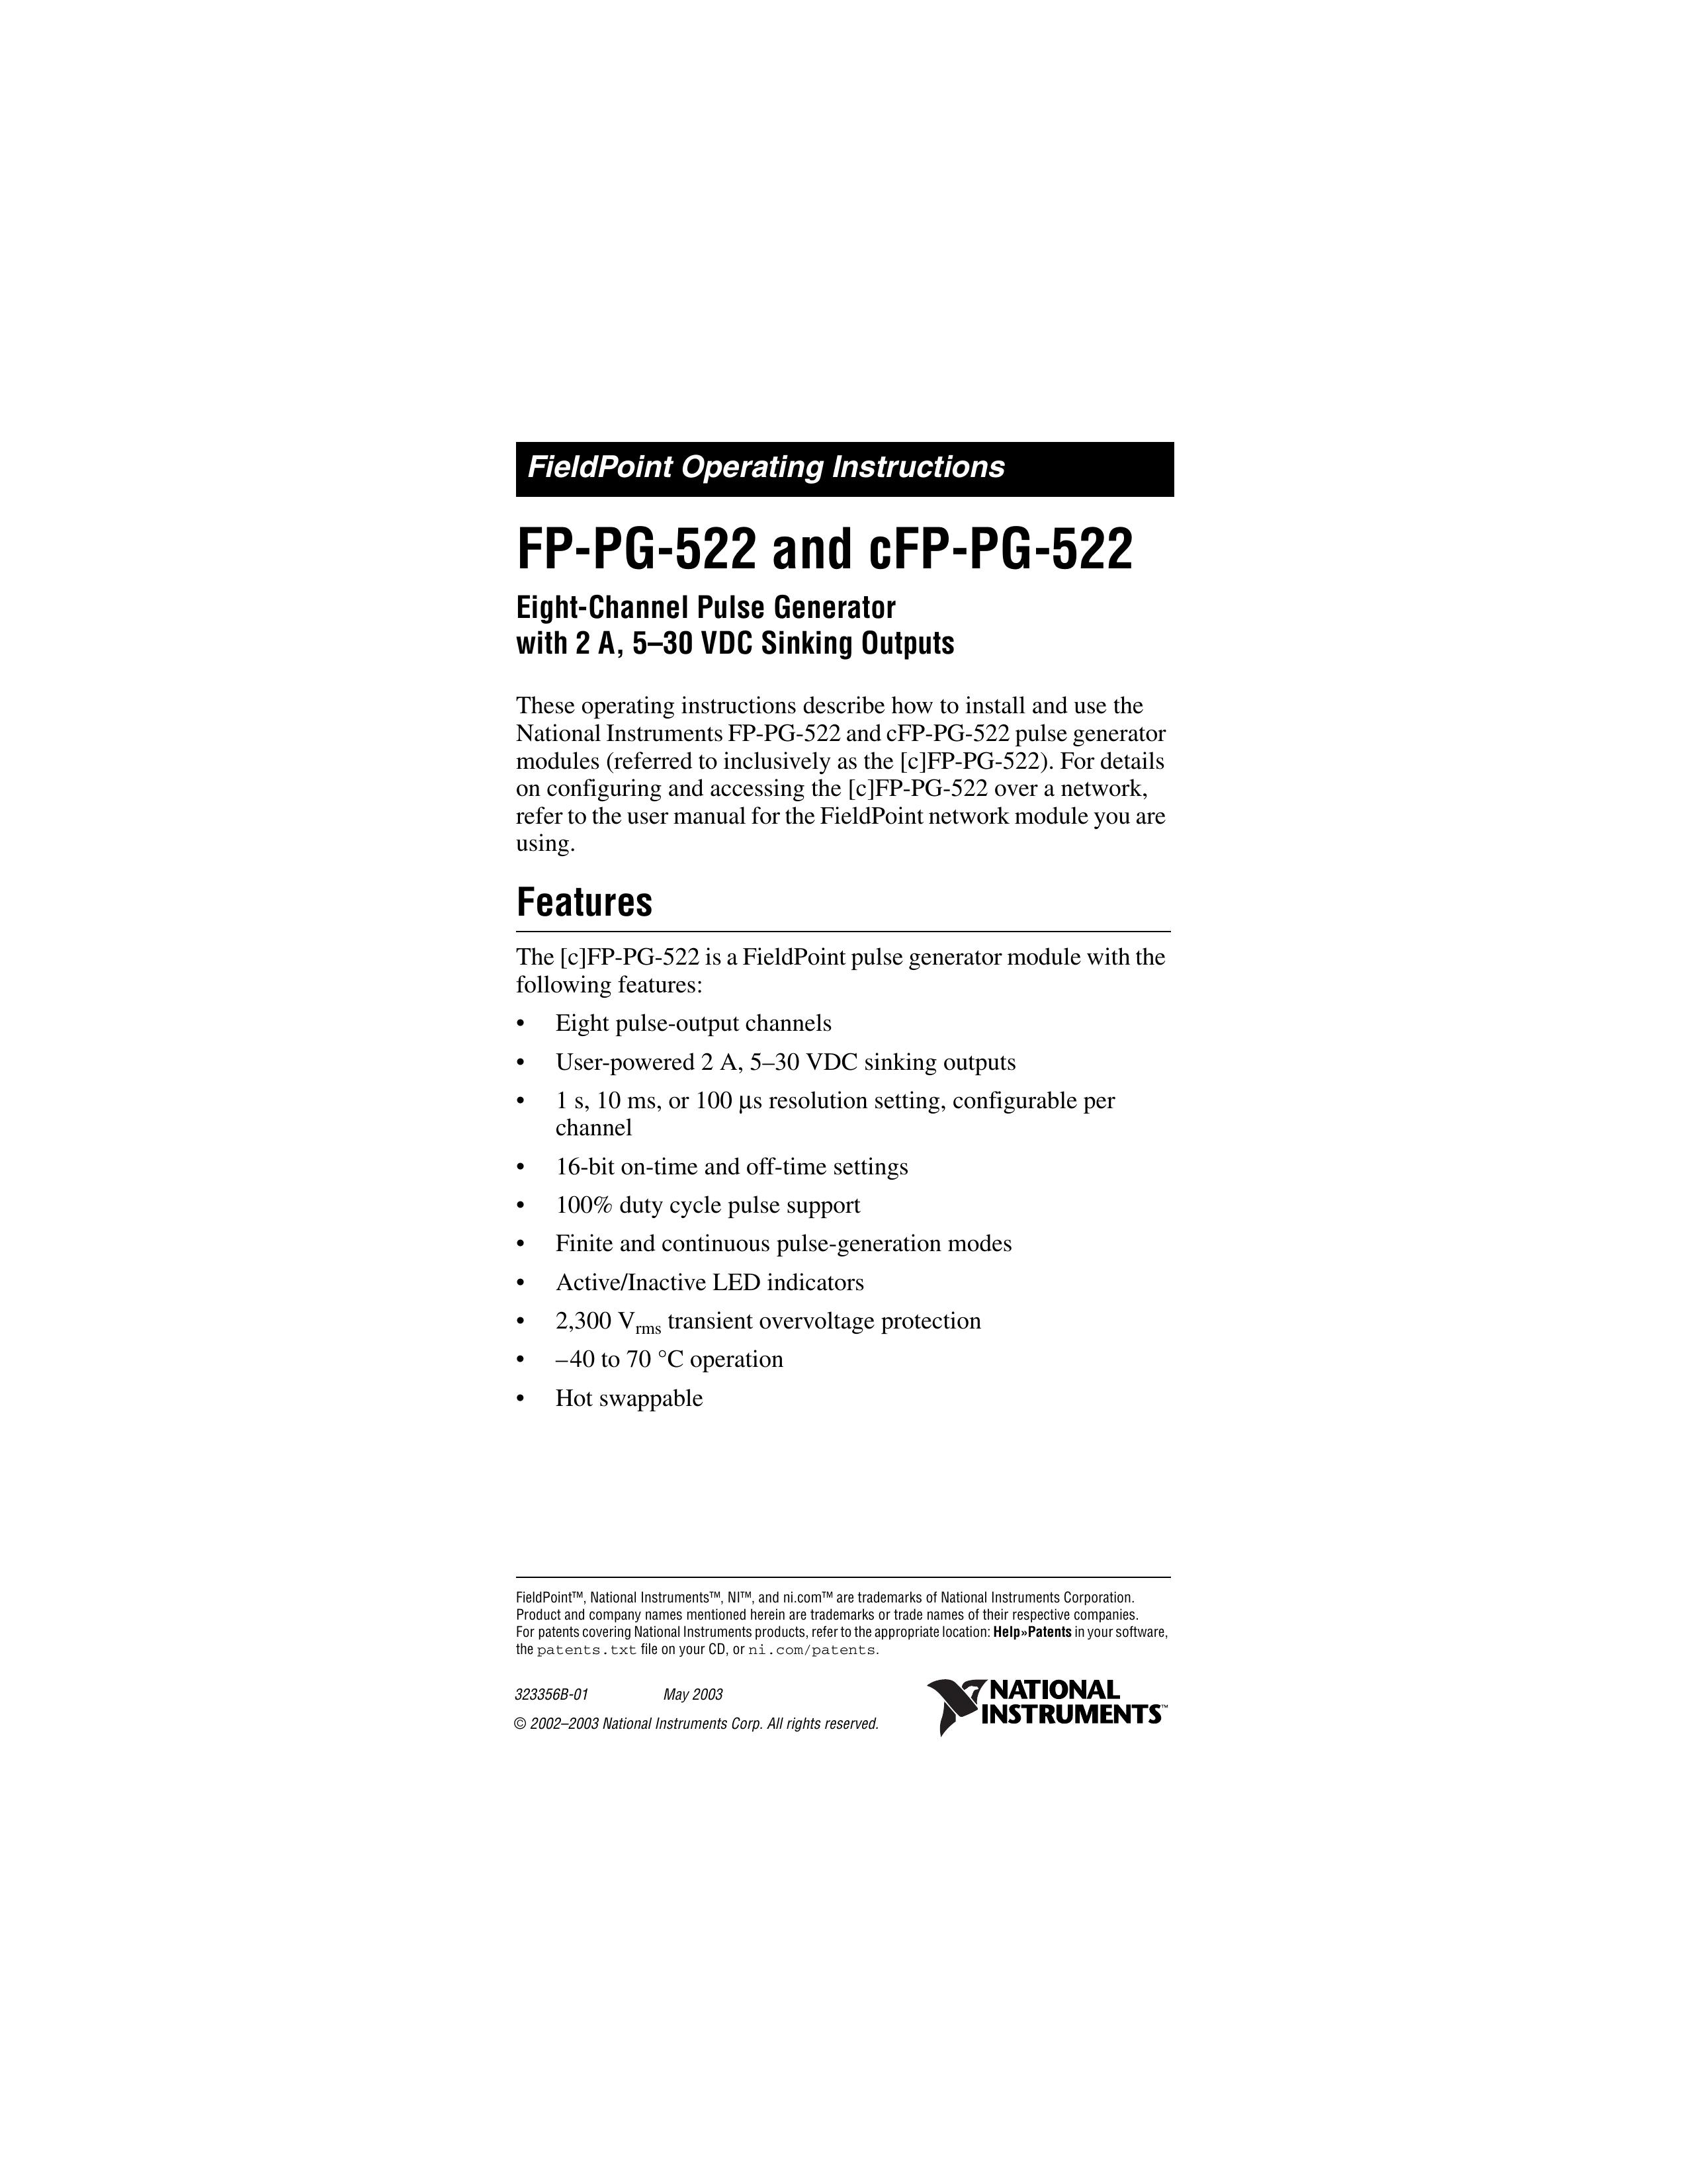 National Instruments FP-PG-522 Blood Pressure Monitor User Manual